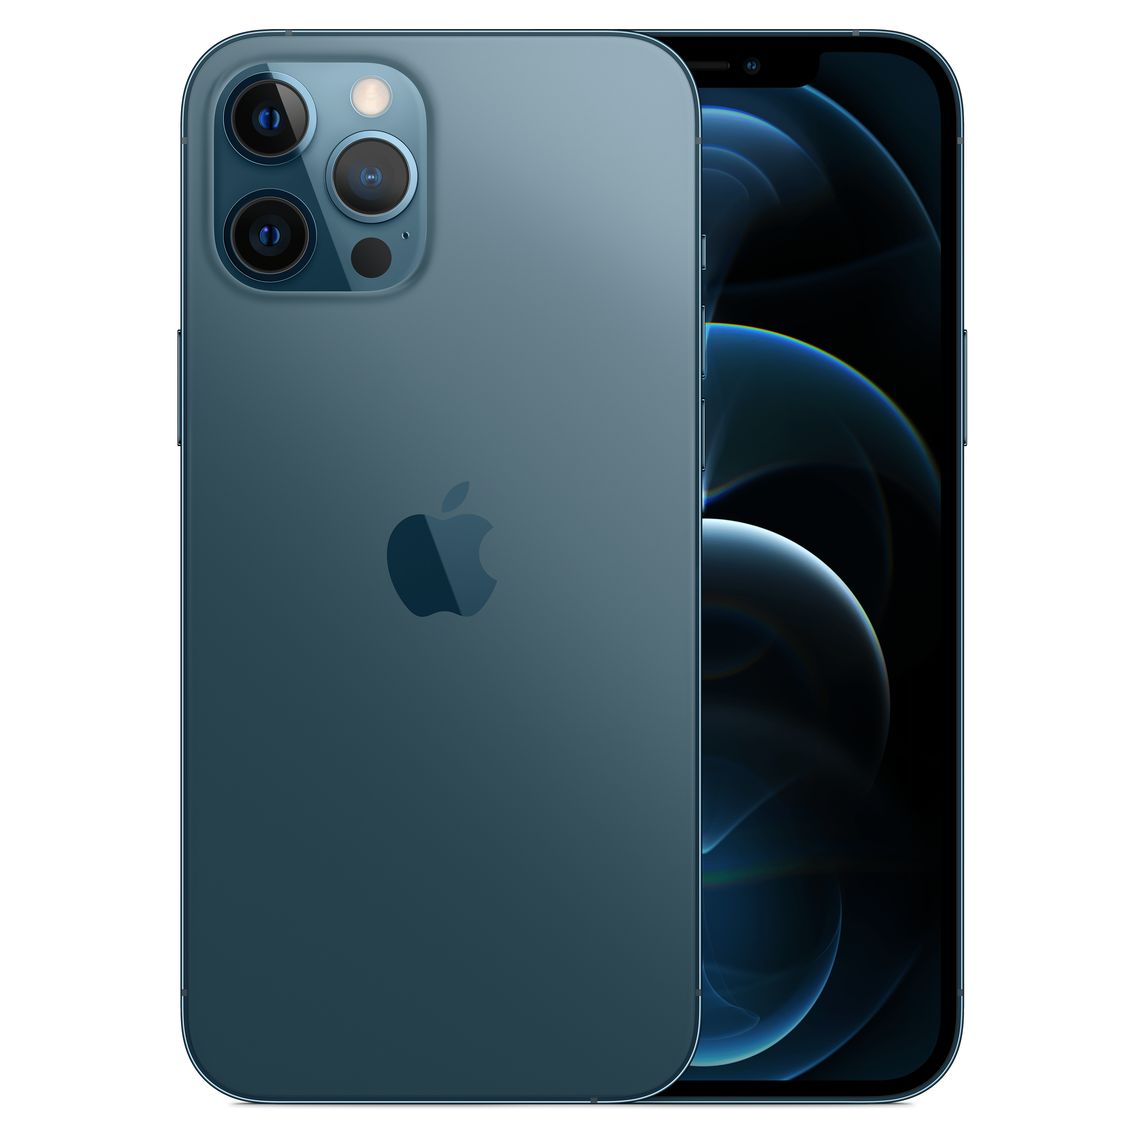 Apple Iphone 12 PRO MAX - 128 GB - Desbloqueado(Refurbished) Entrega gratis en Tijuana